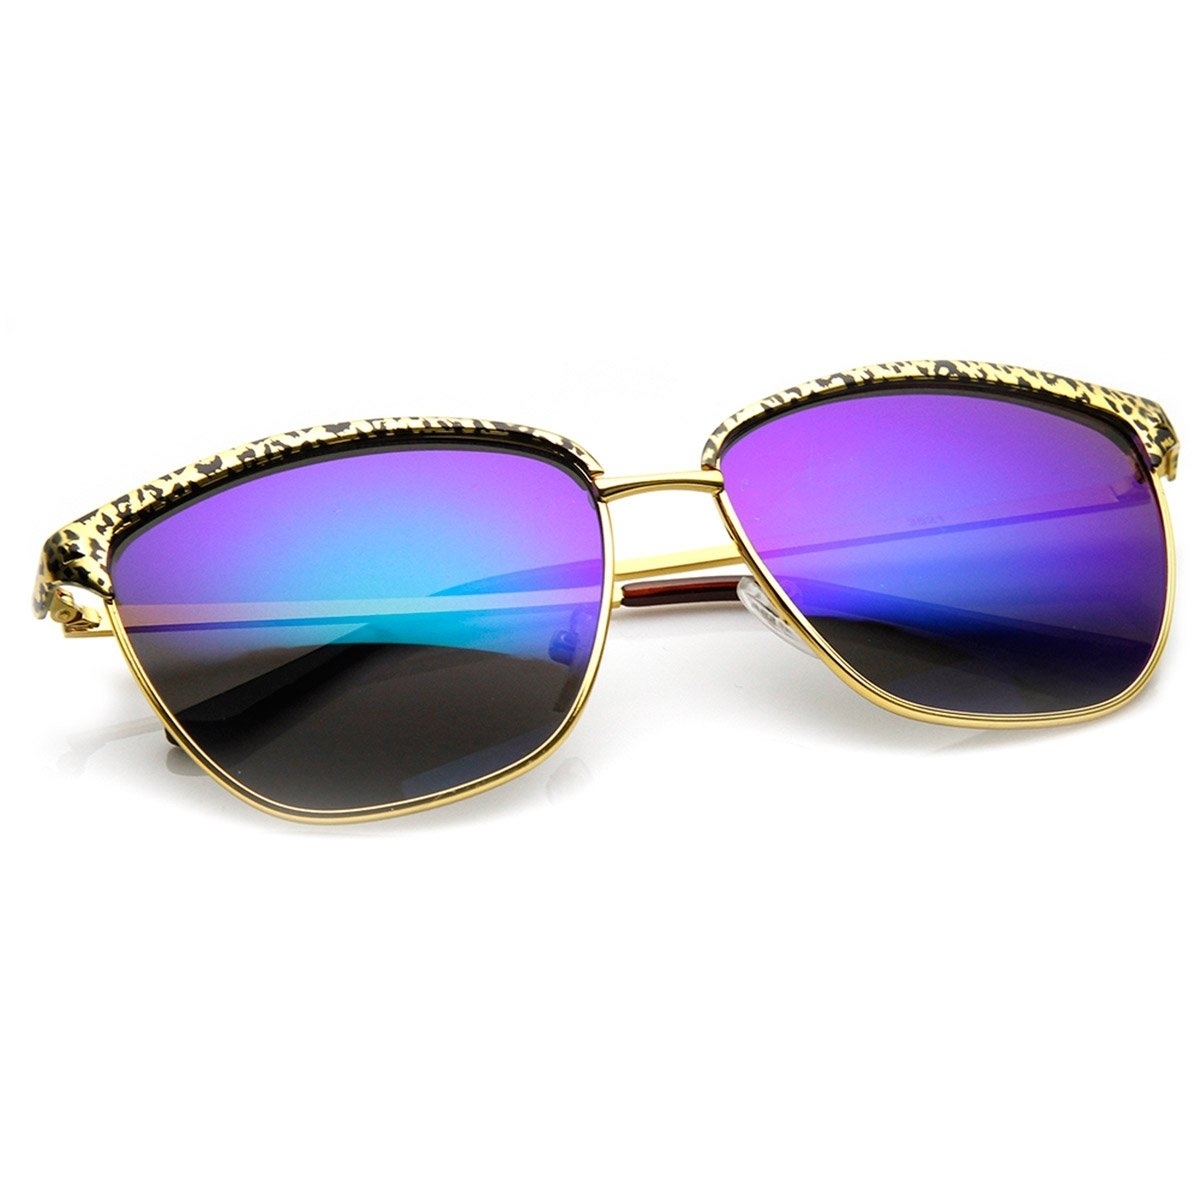 Womens Fashion Full Metal Frame Animal Print Horn Rimmed Sunglasses - Silver-Leopard Lavender